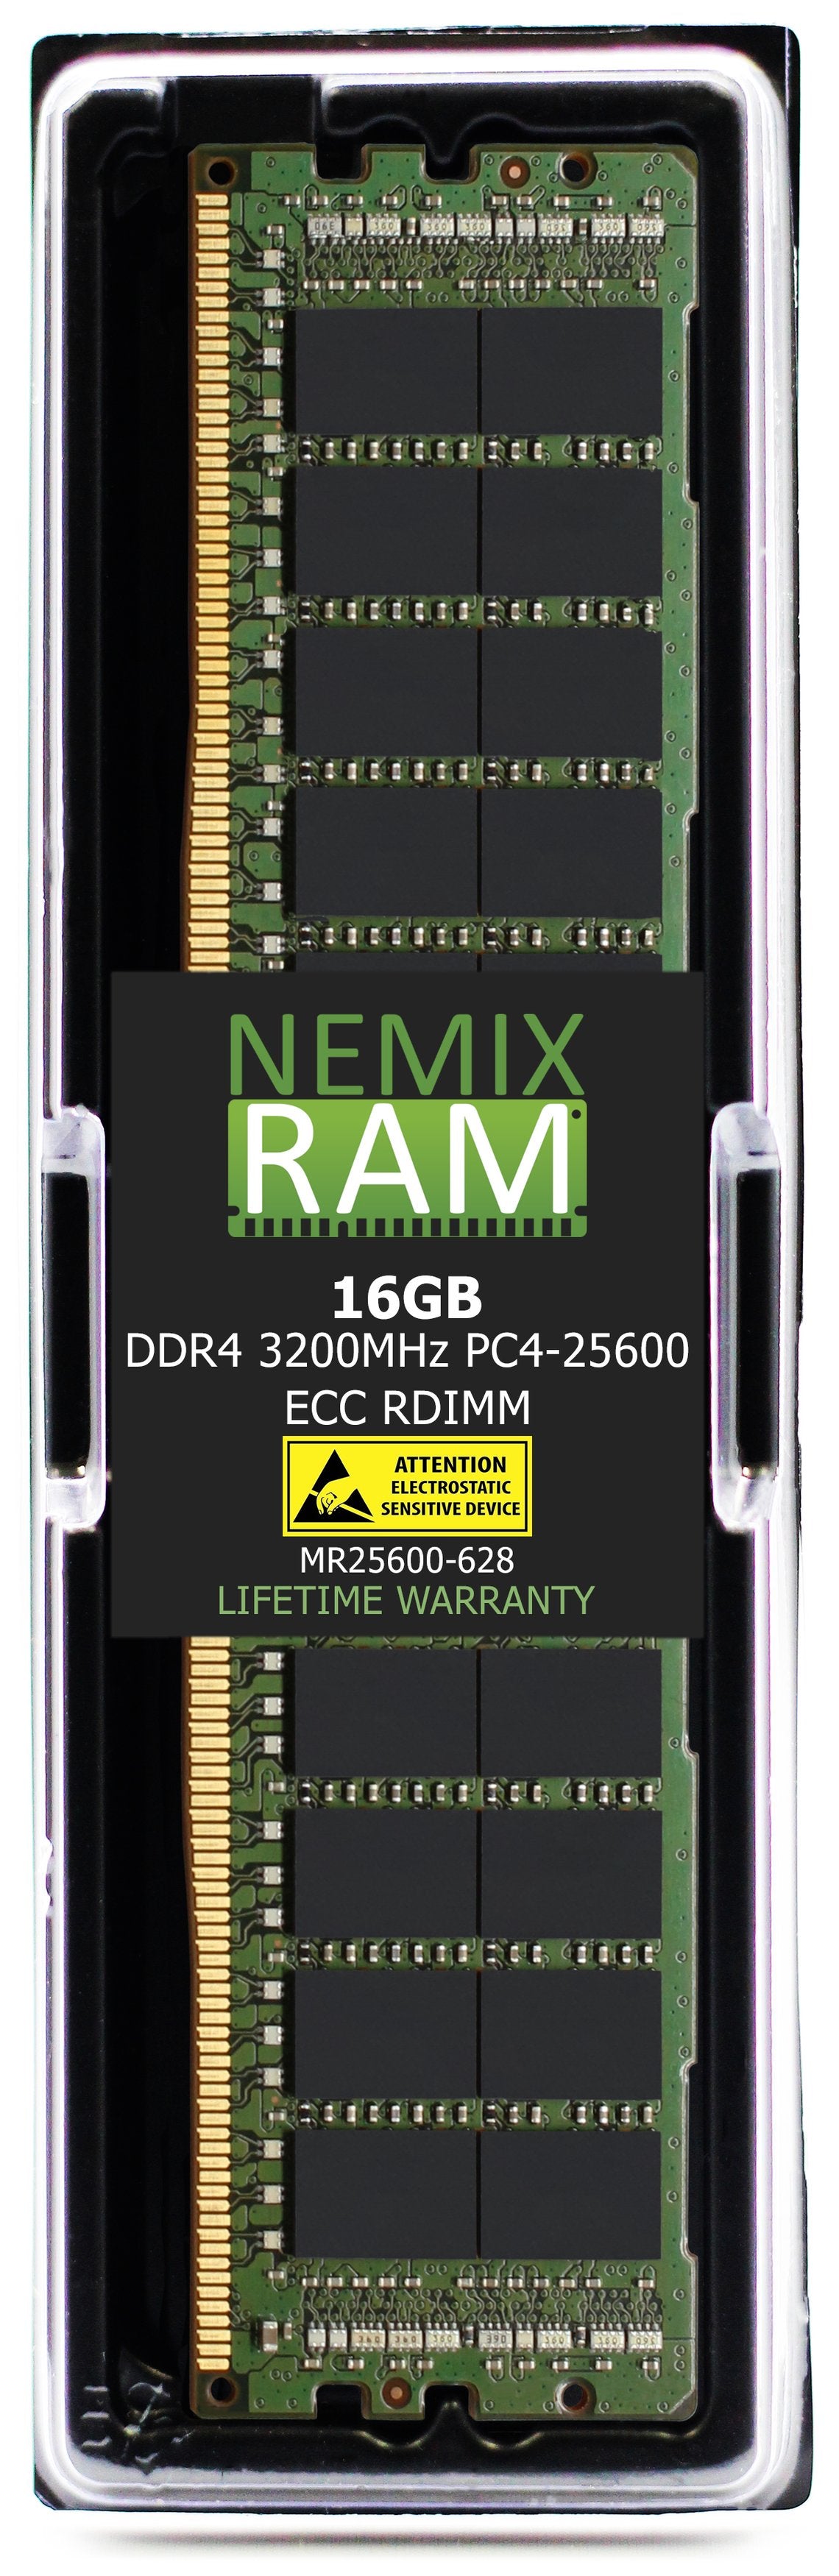 16GB DDR4 3200MHZ PC4-25600 RDIMM Compatible with Supermicro MEM-DR416L-HL02-ER32